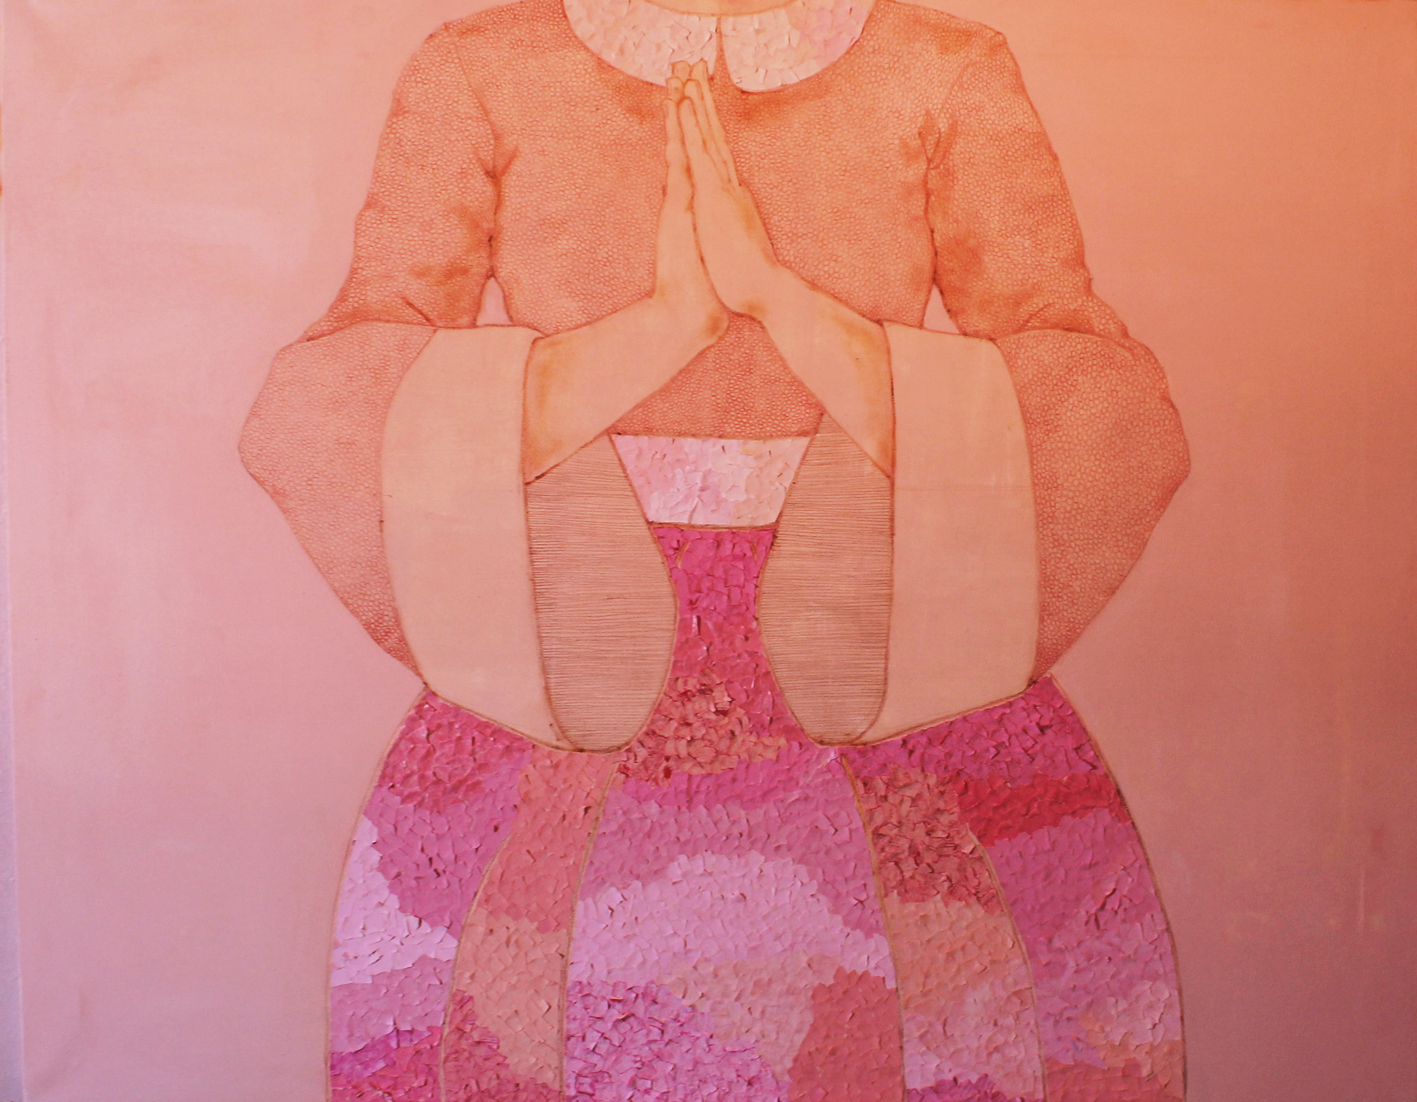 Mammina,mixed media on canvas, 70x100cm, 2013. Sold|